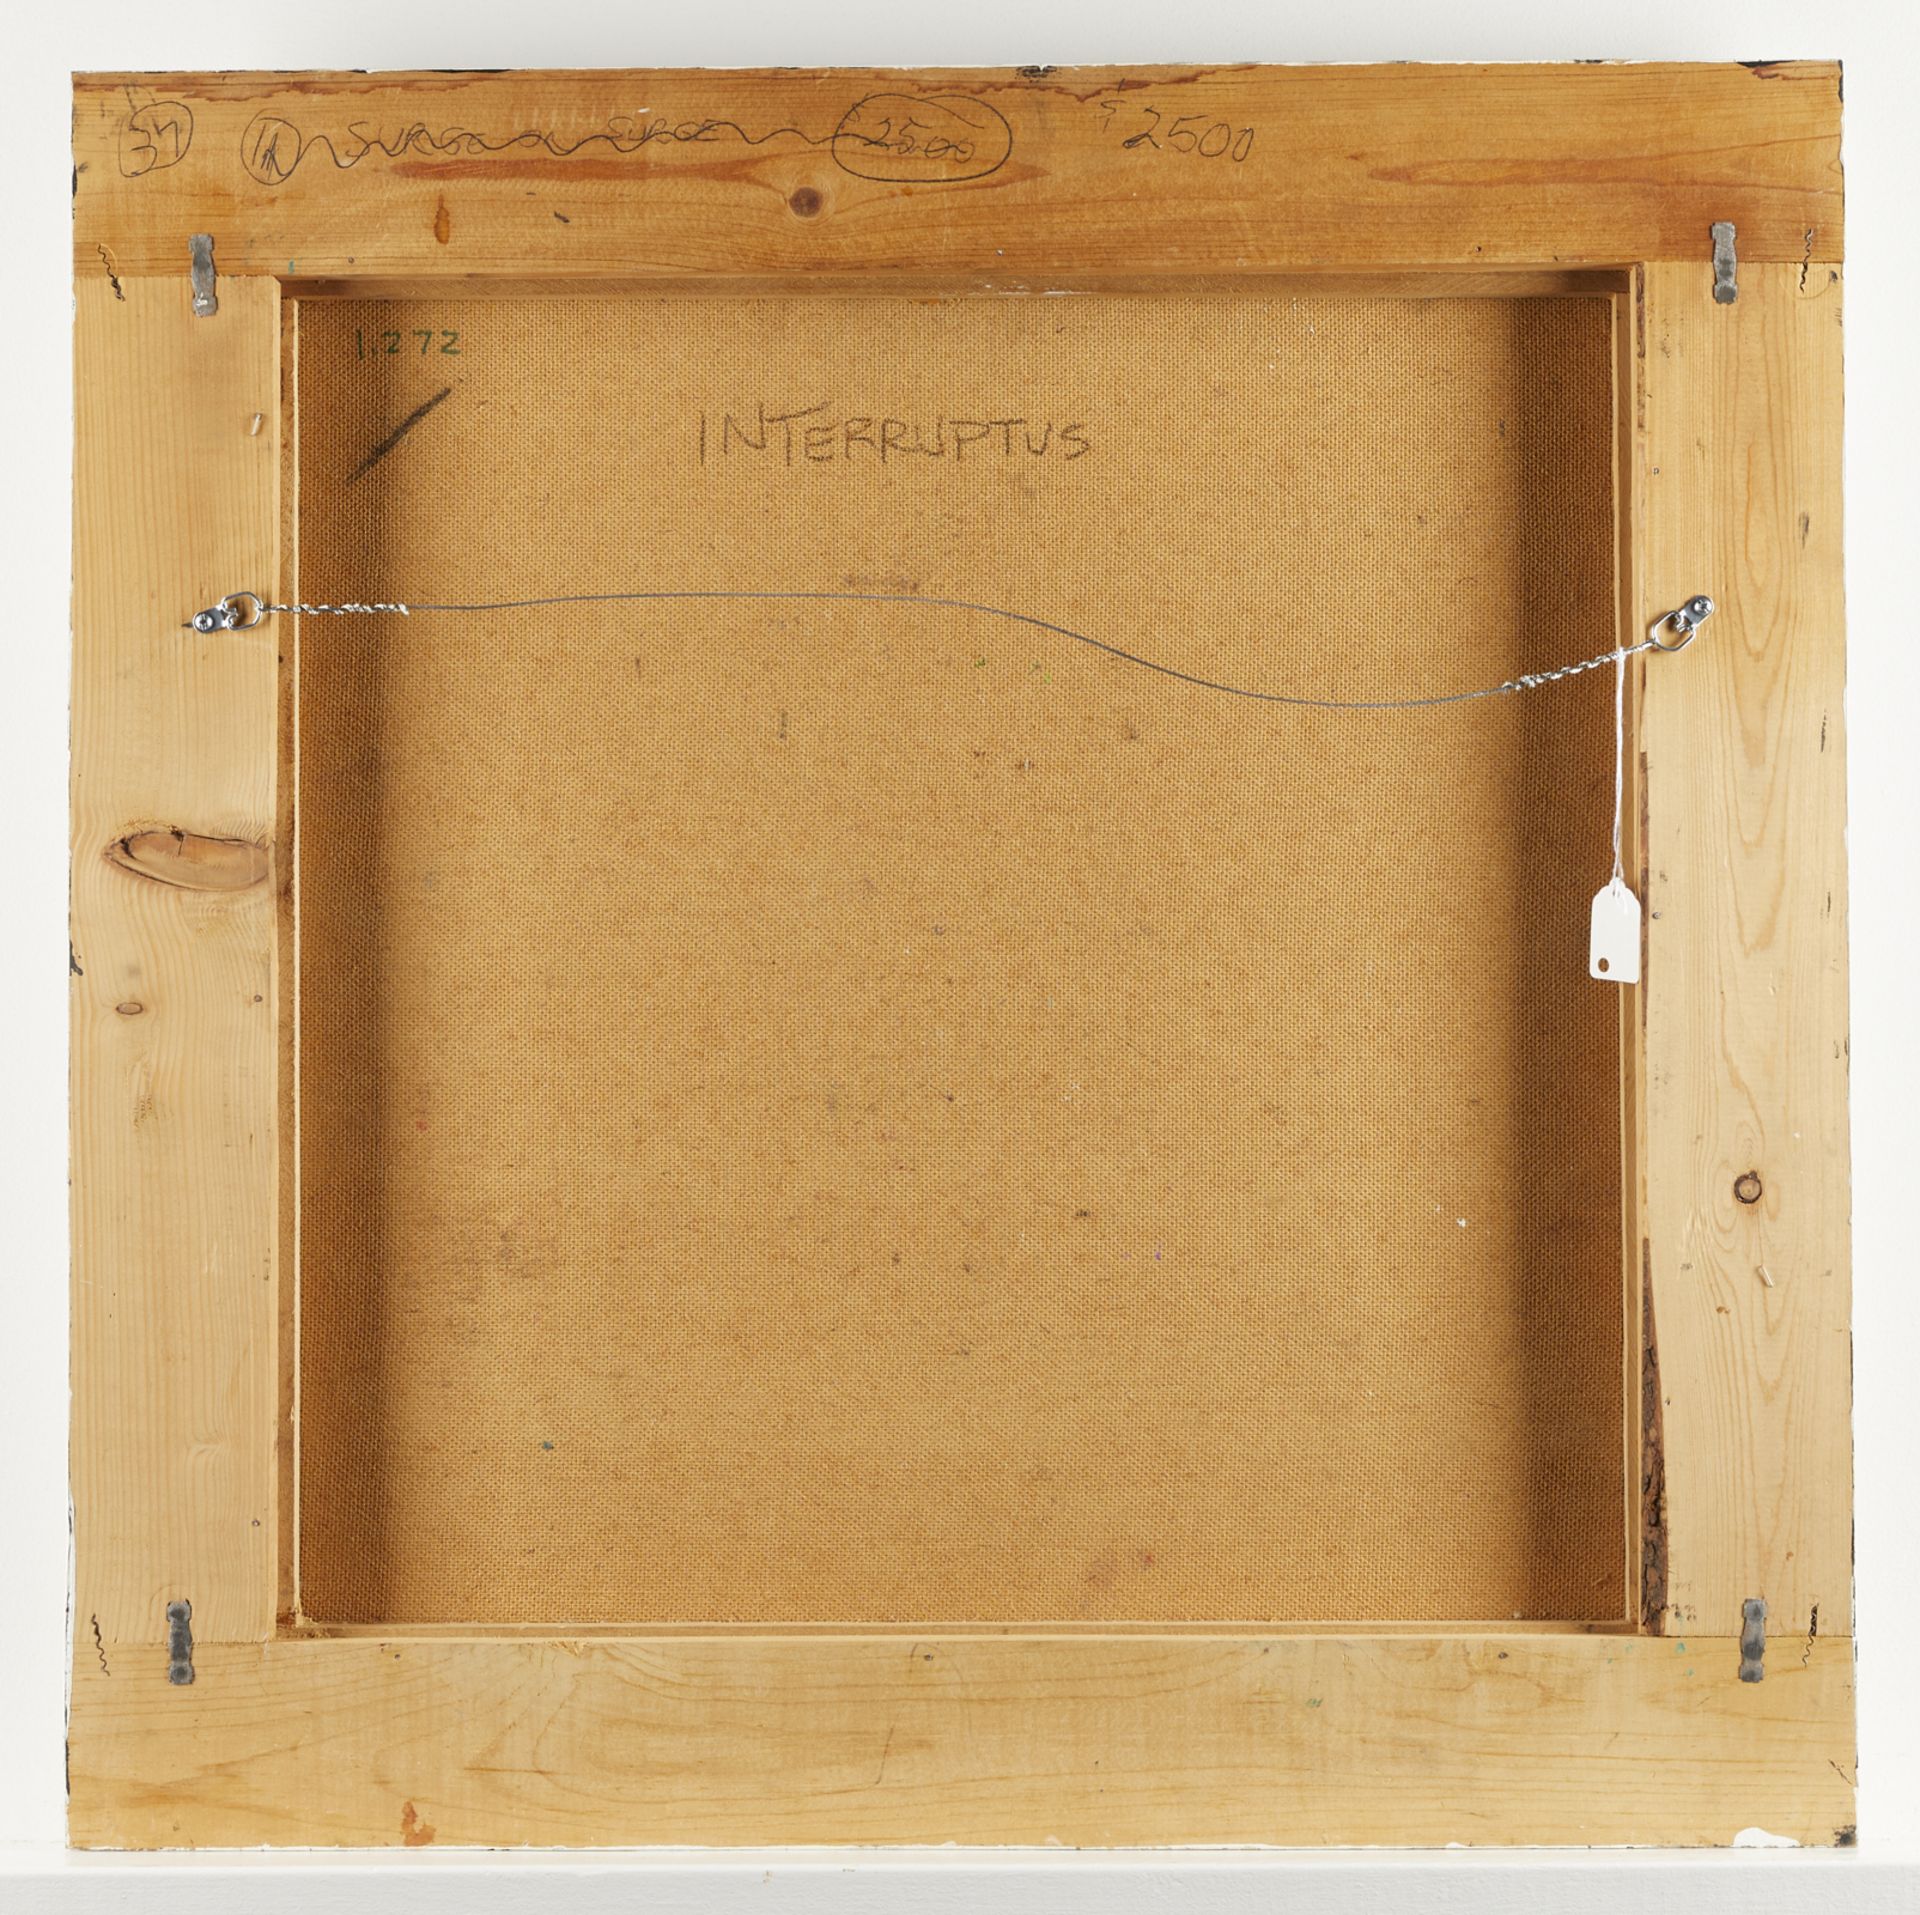 Harold Zisla "Interruptus" Abstract Painting - Image 6 of 8